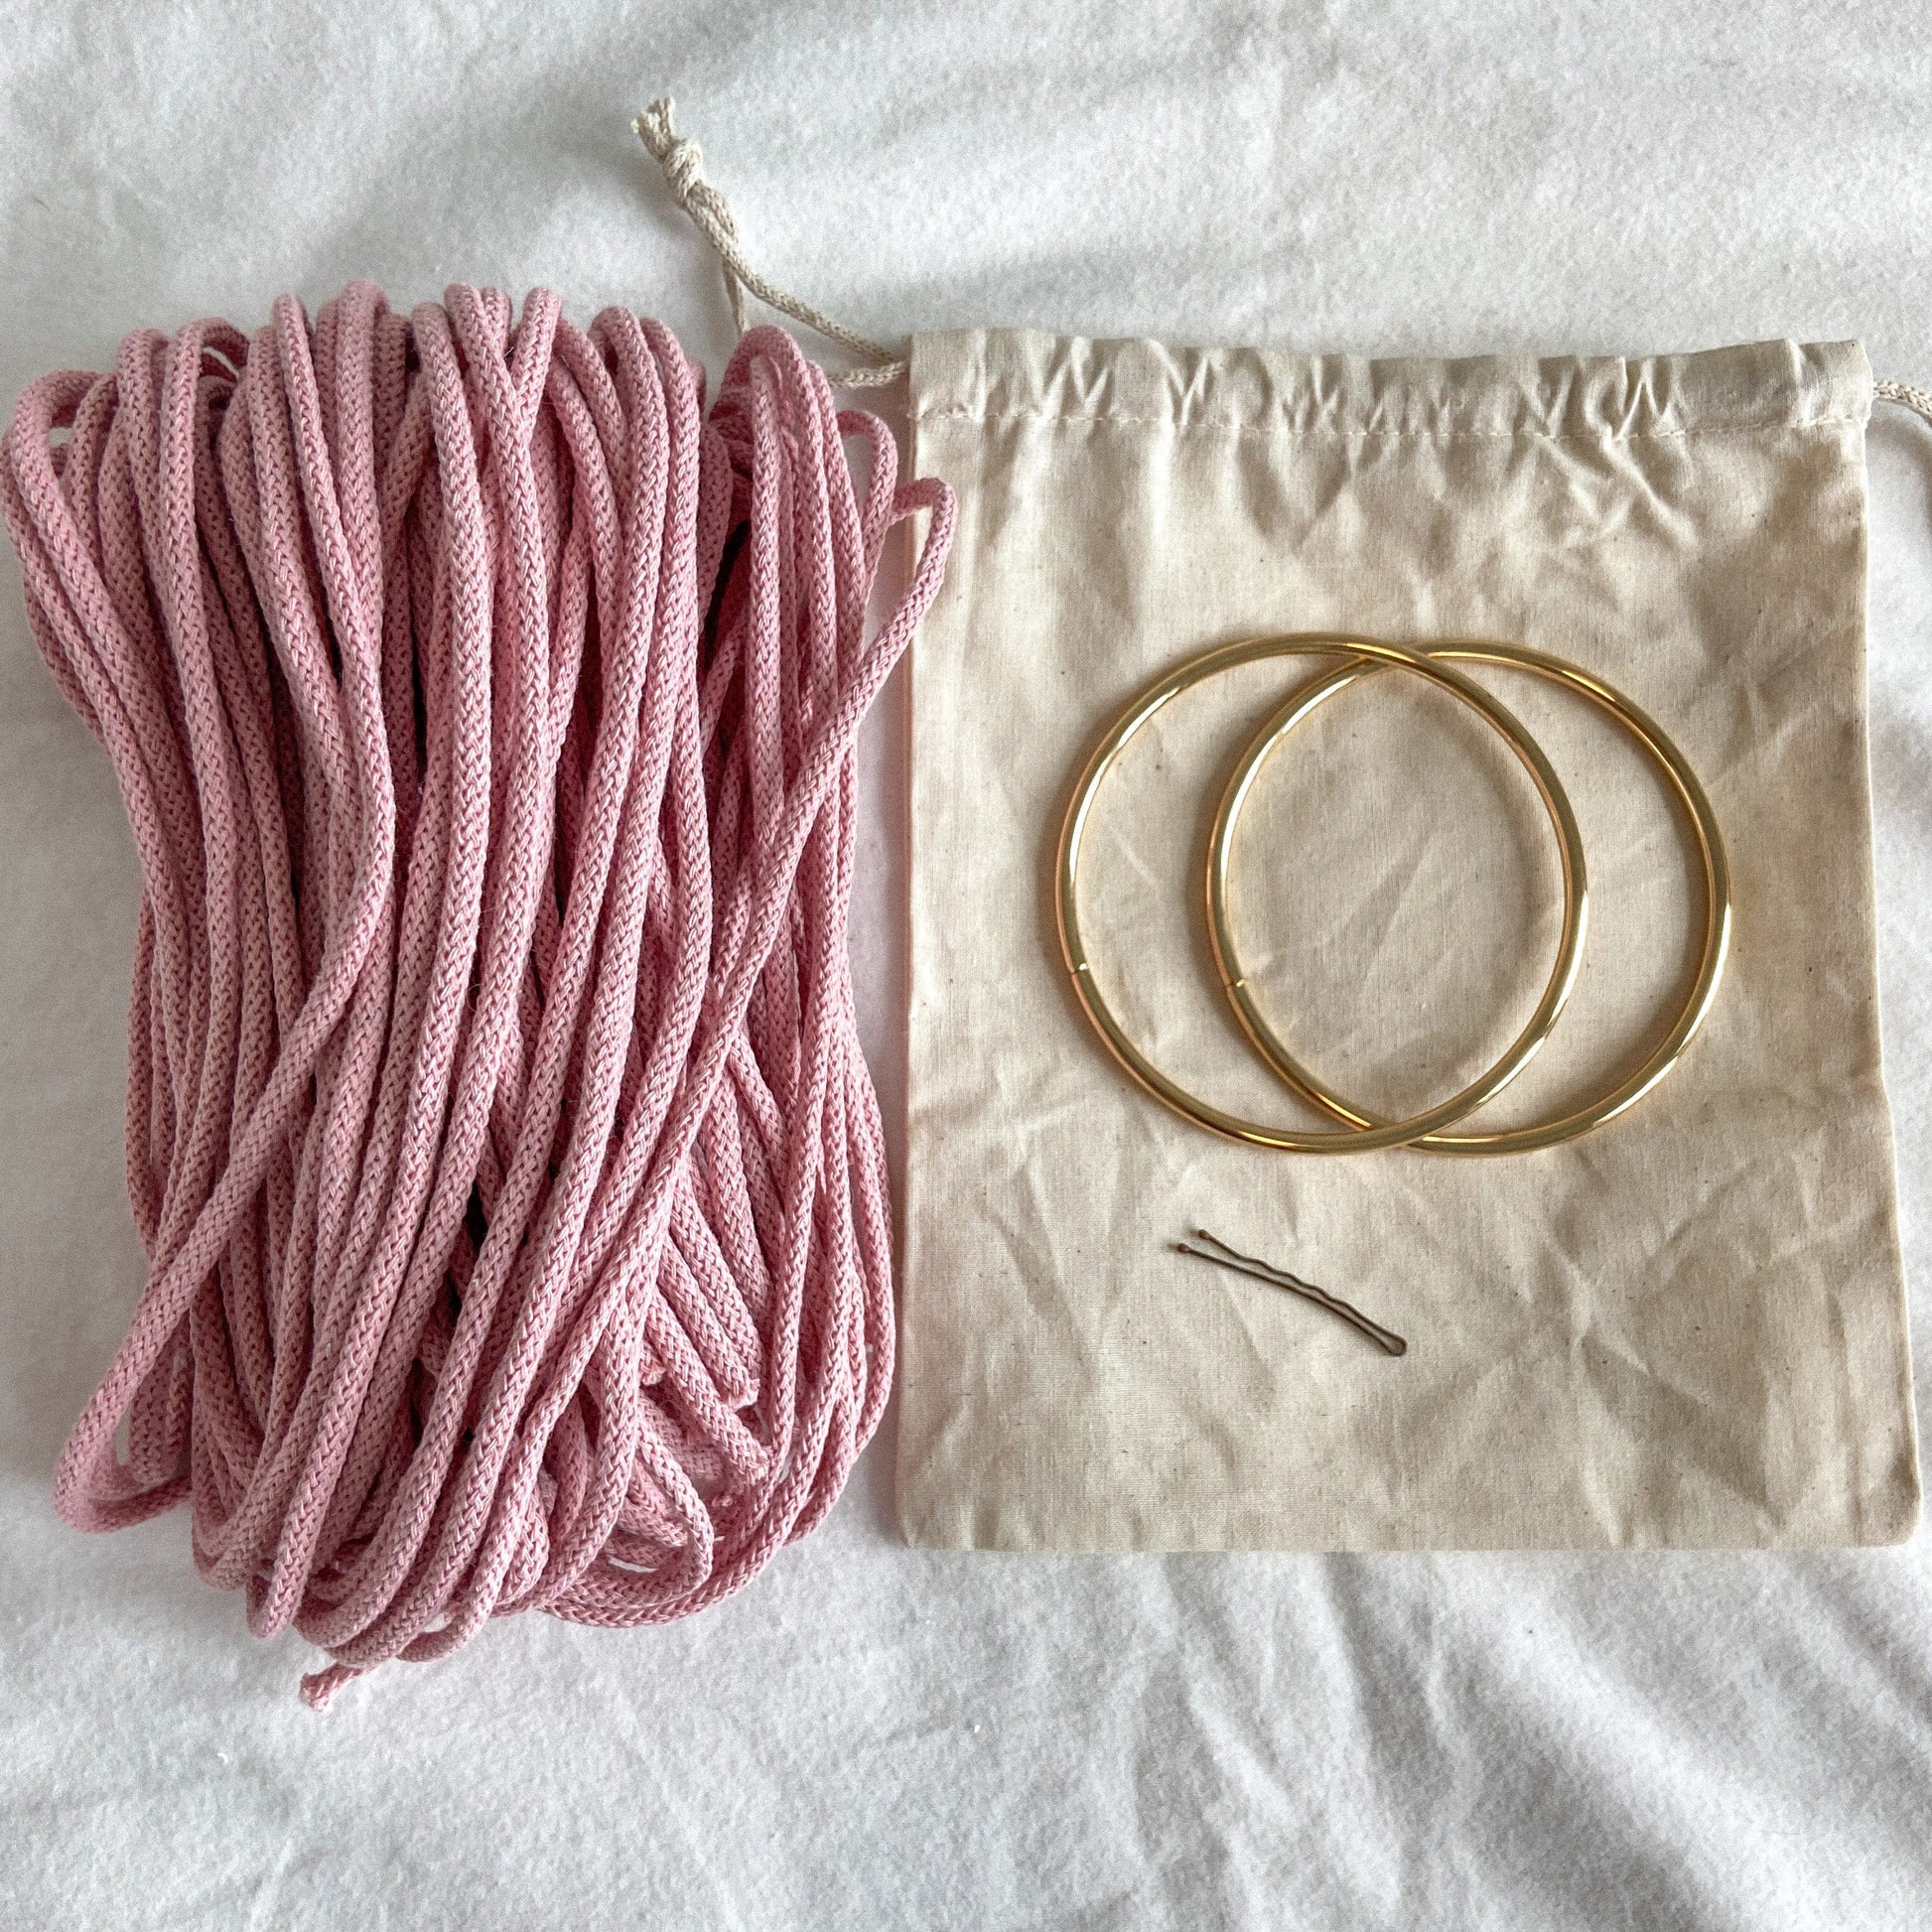  Craft Kits for Adult Women, 6 Colors Macrame Handbag Kit, Supplies: Pattern Instructions Cord Handles & Craft Bag